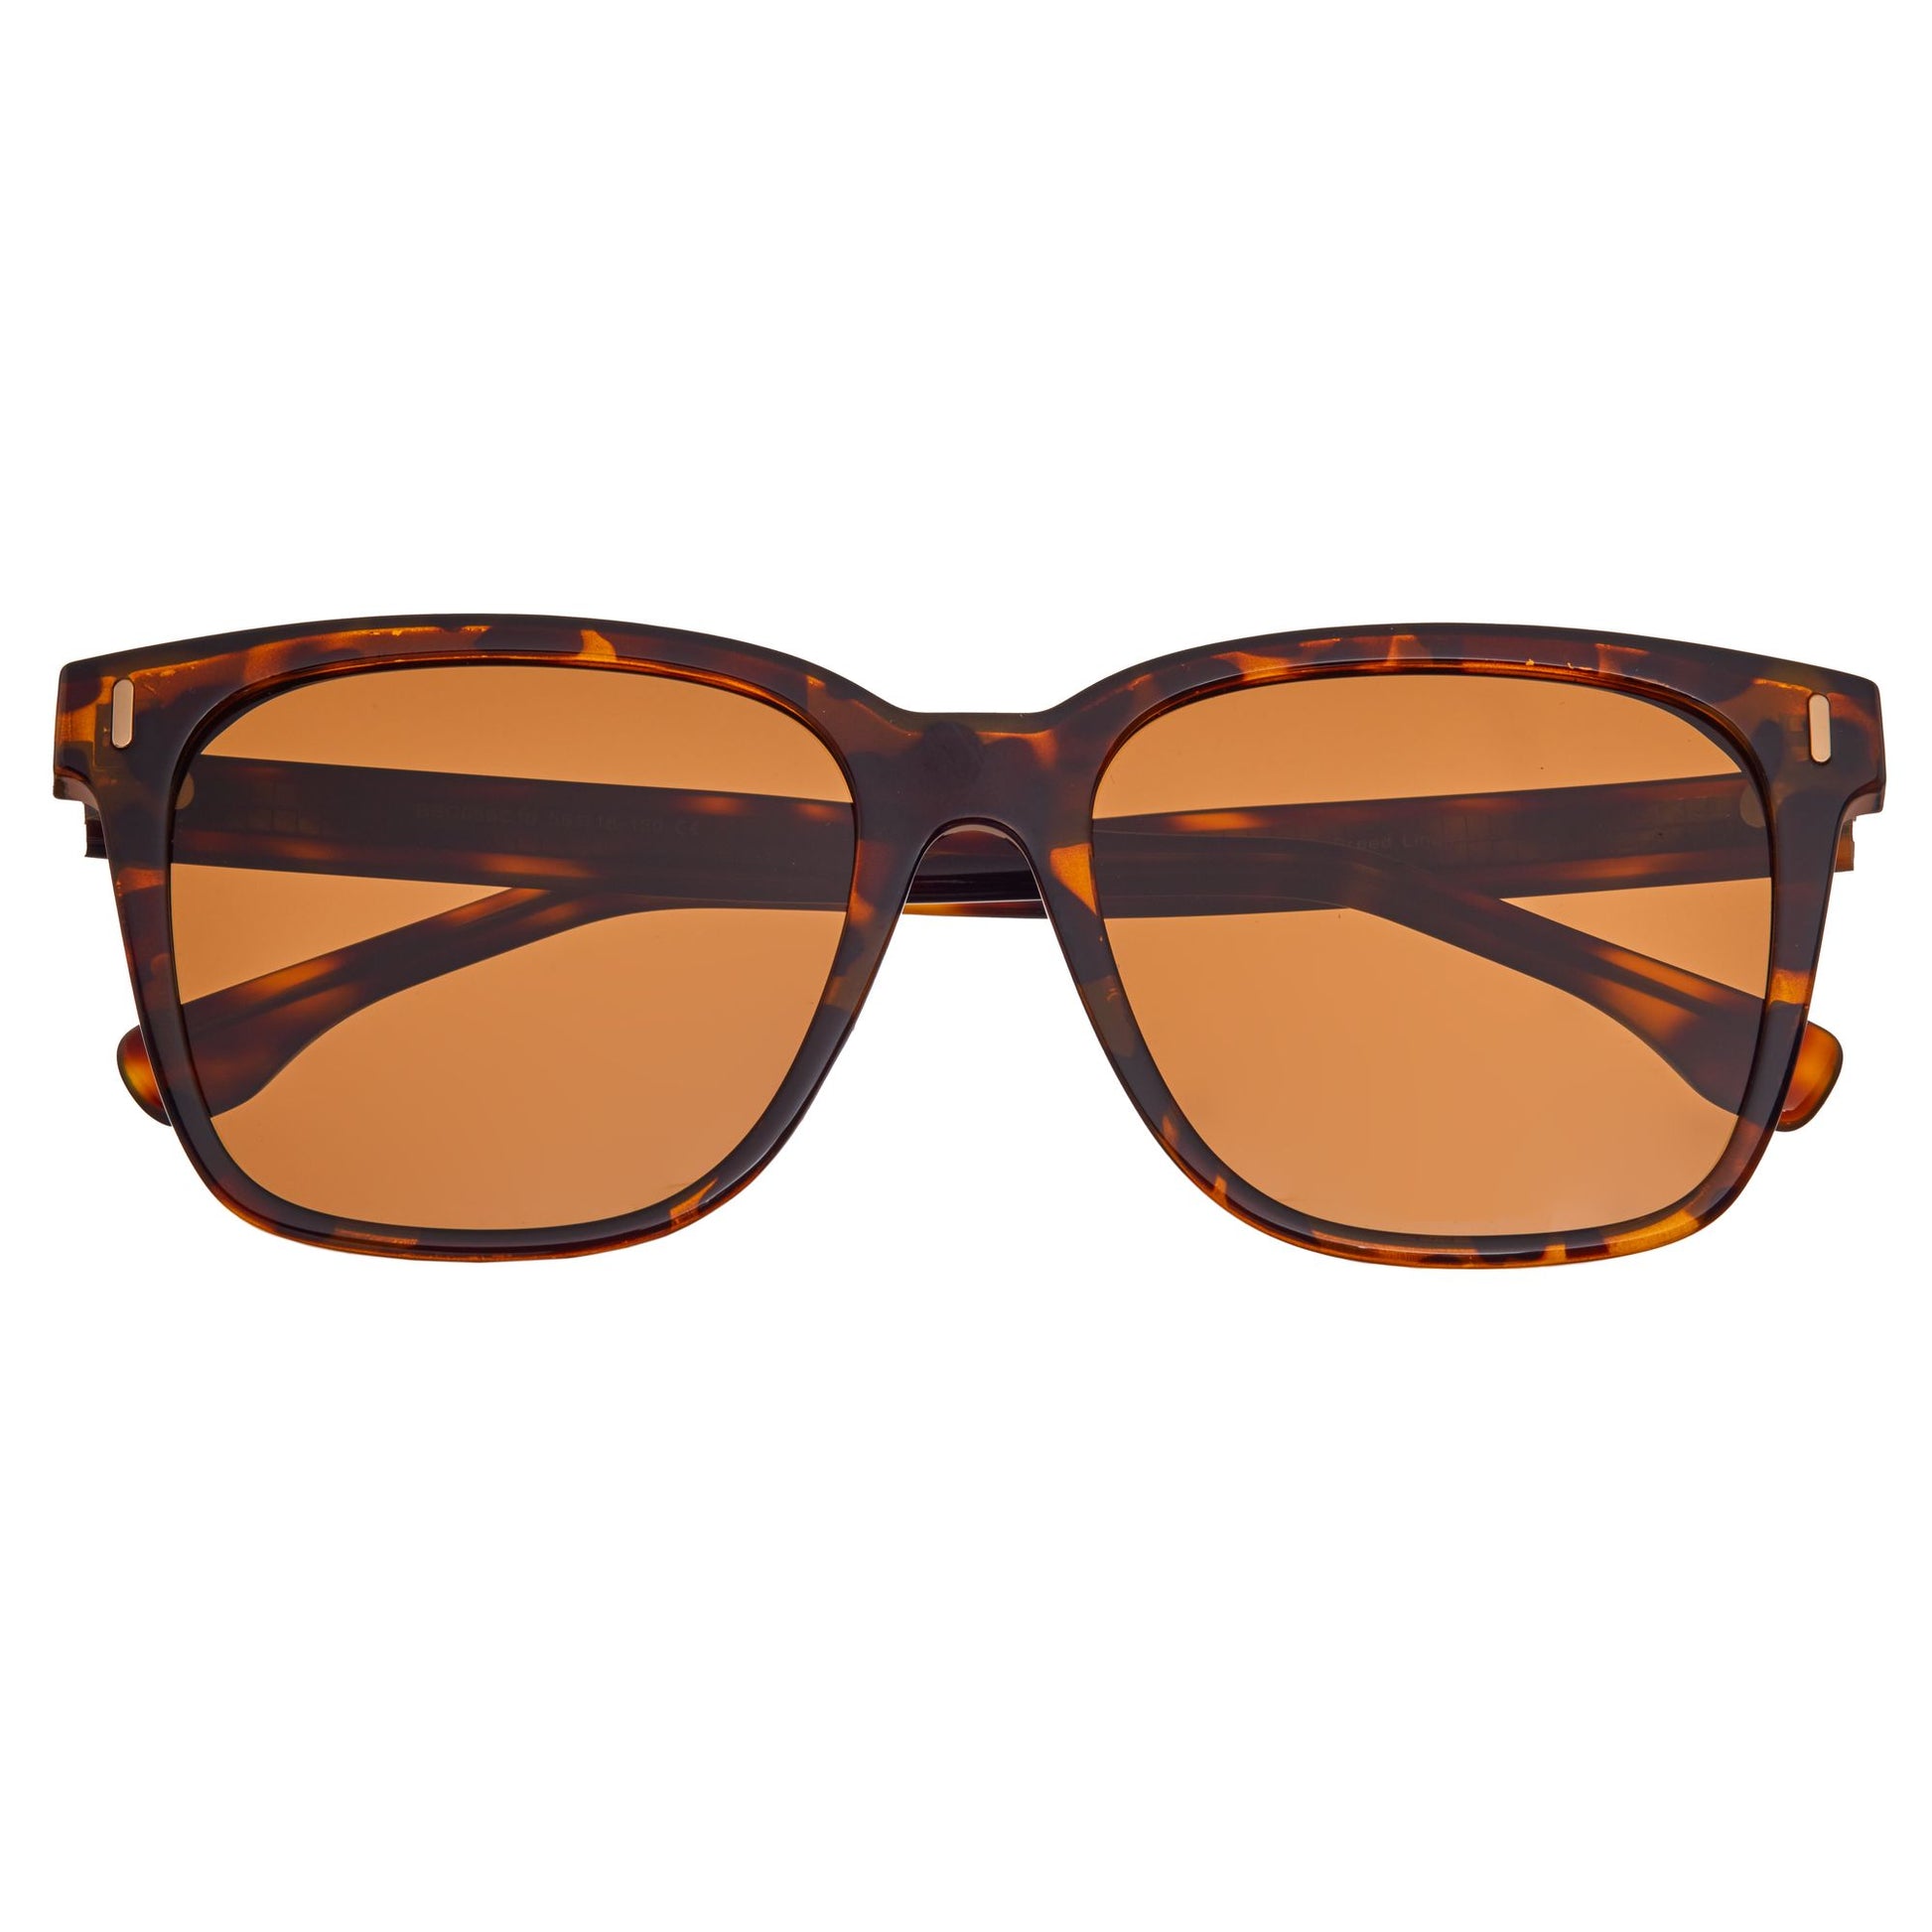 Breed Linux Polarized Sunglasses - Tortoise/Brown - BSG066C10